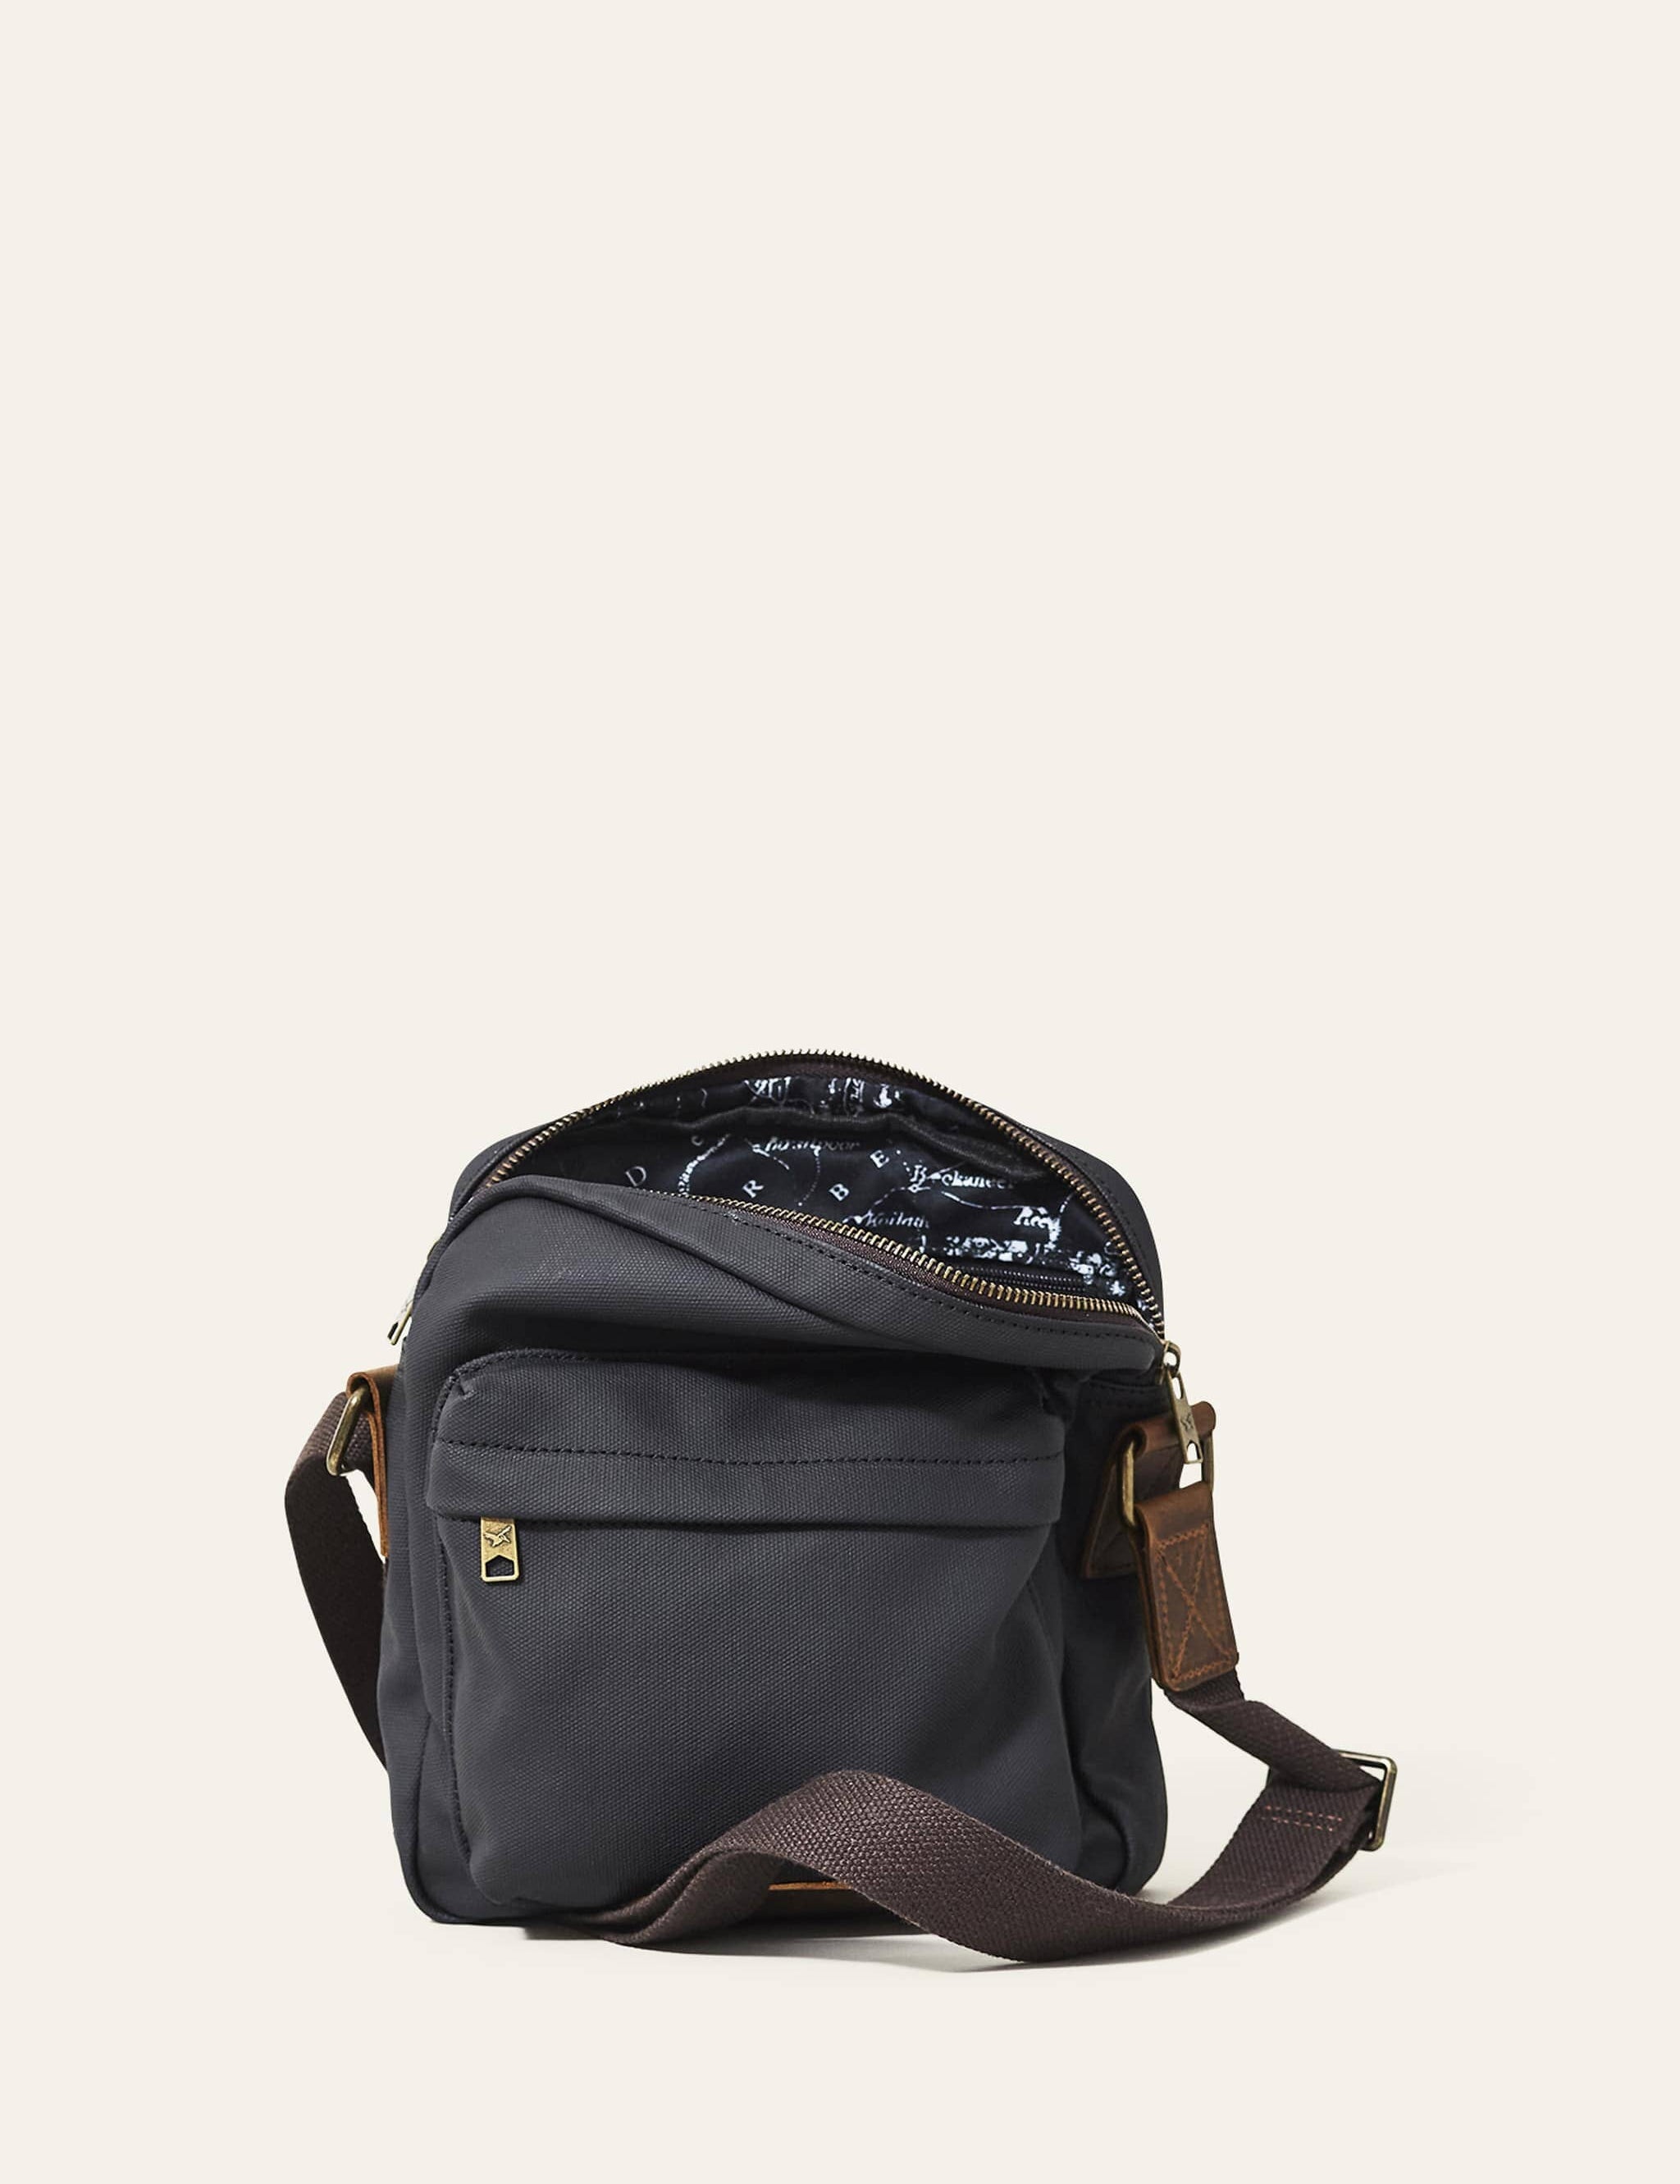 matte-black-yala-coated-cotton-cross-body-bag-821691.jpg